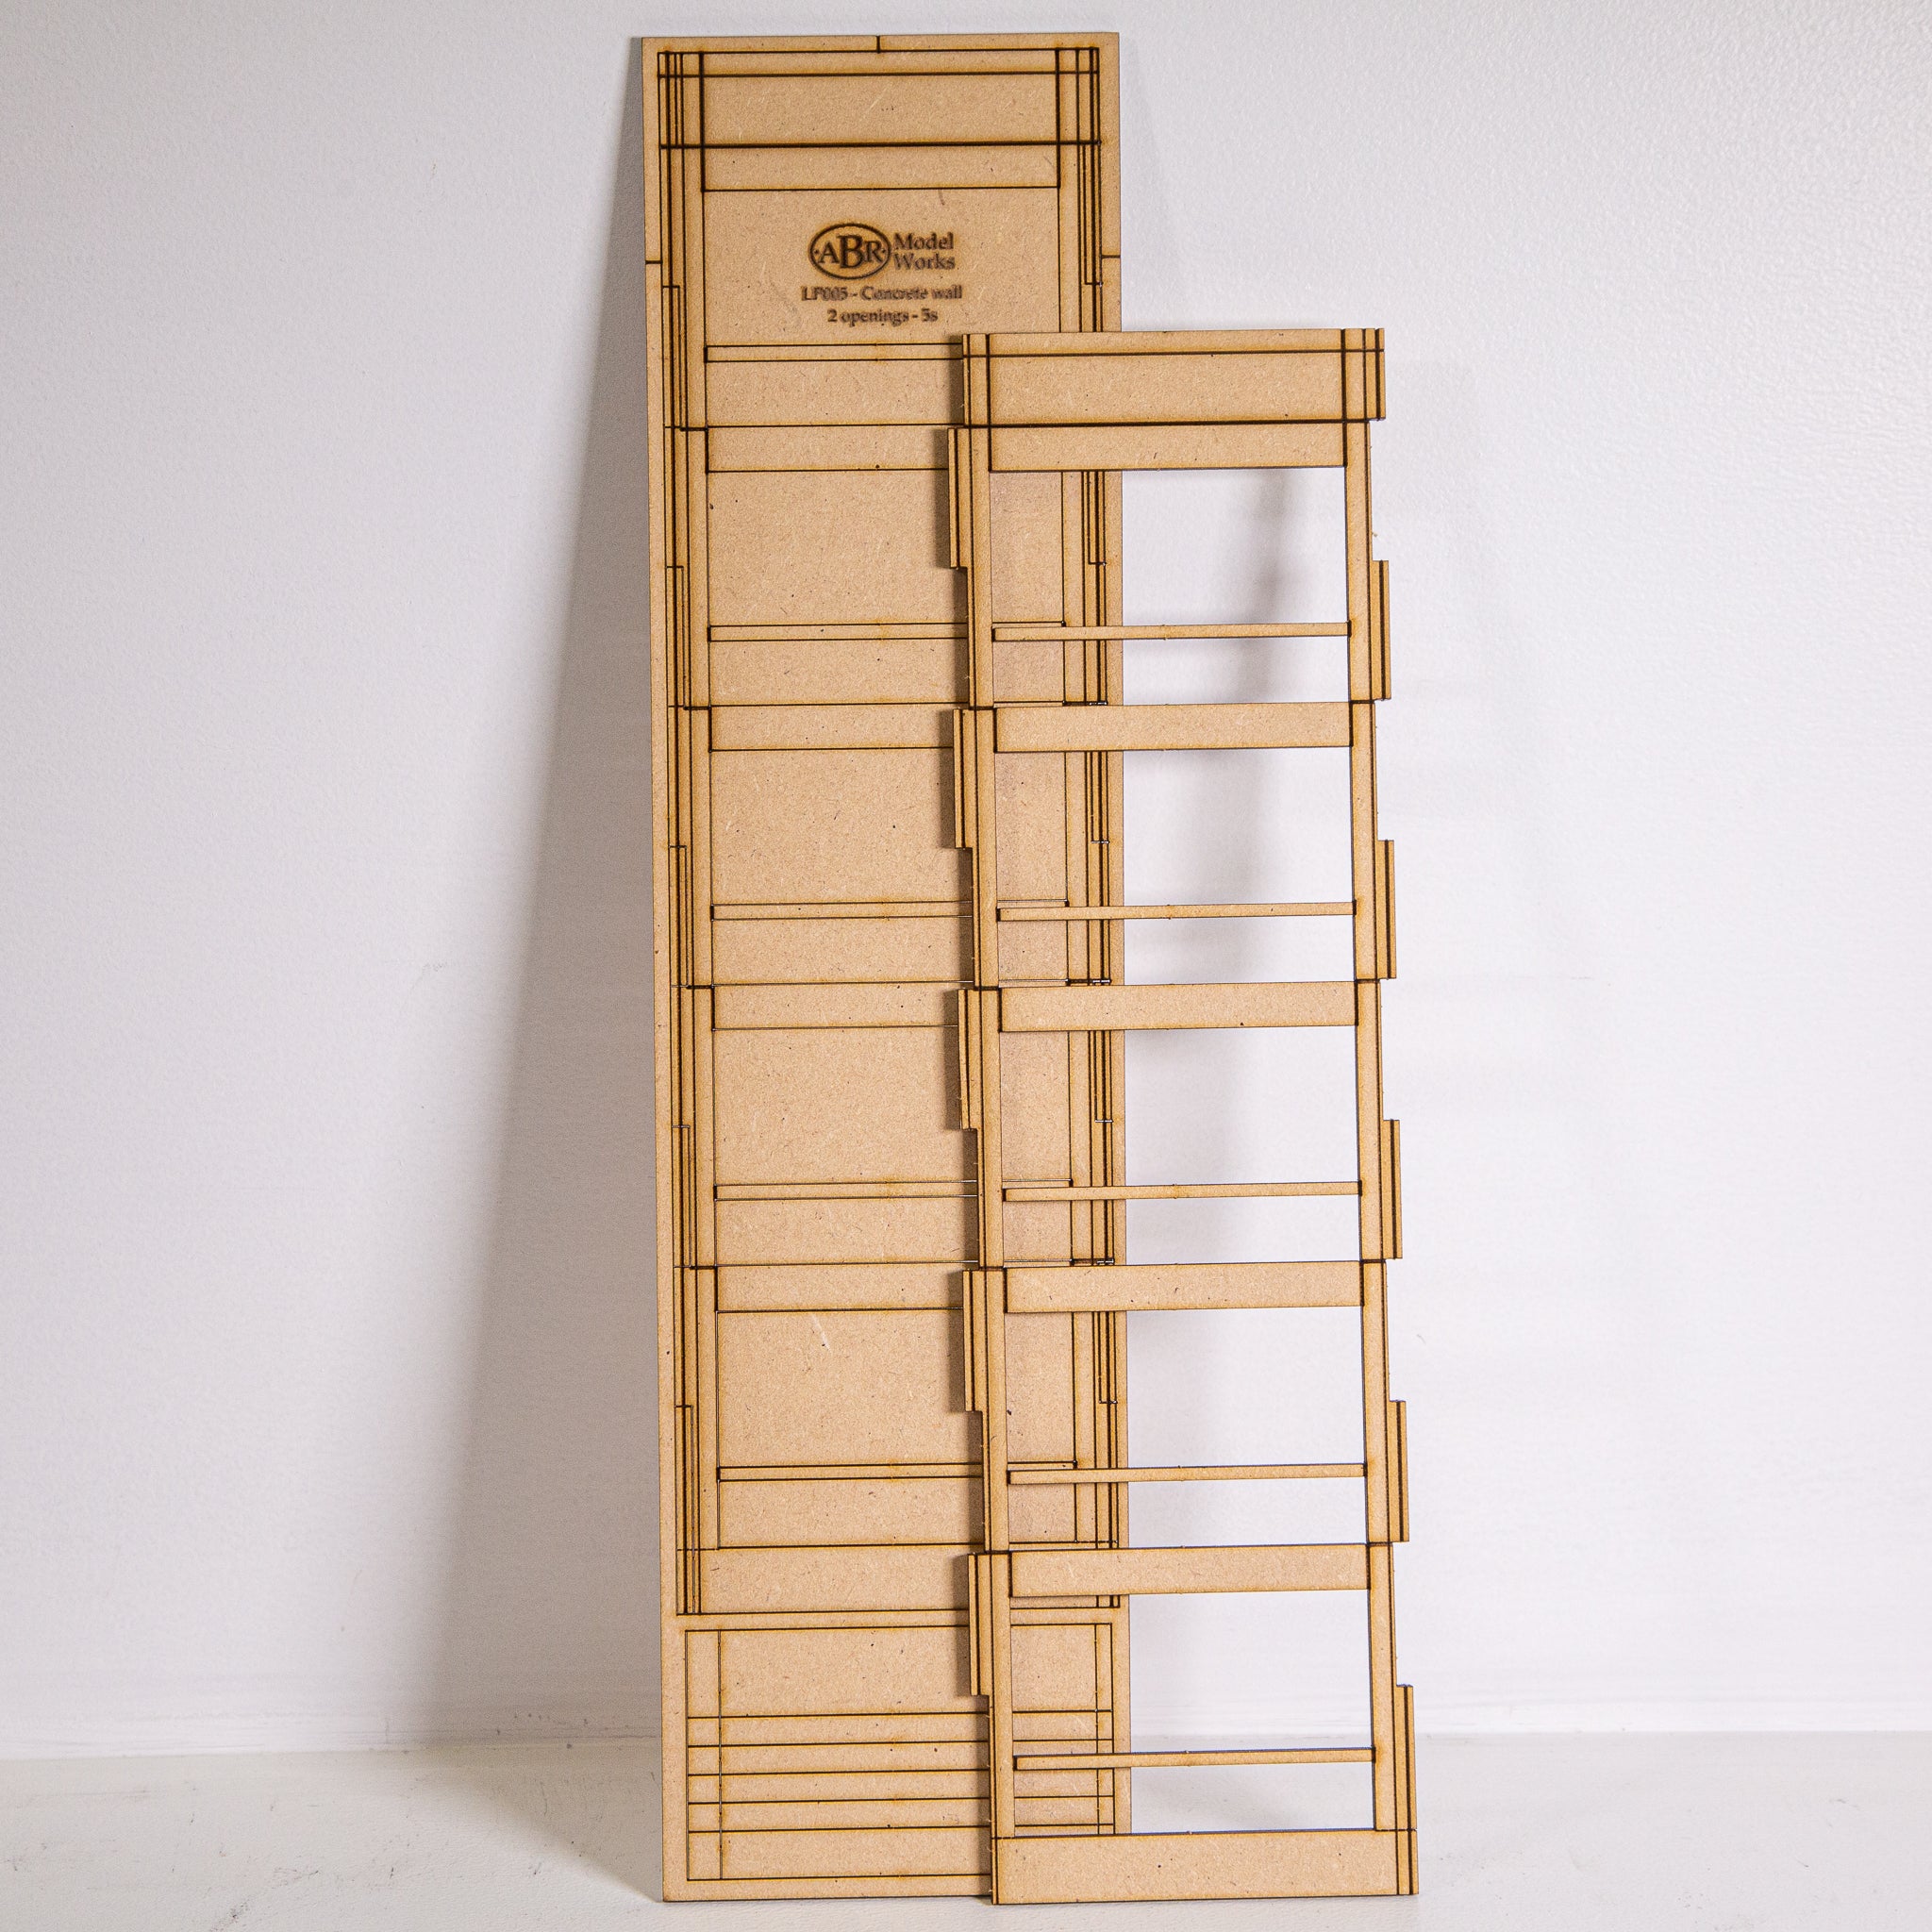 LP005 - HO Scale - Concrete modular model wall panel 2 openings per storey, 5 storey